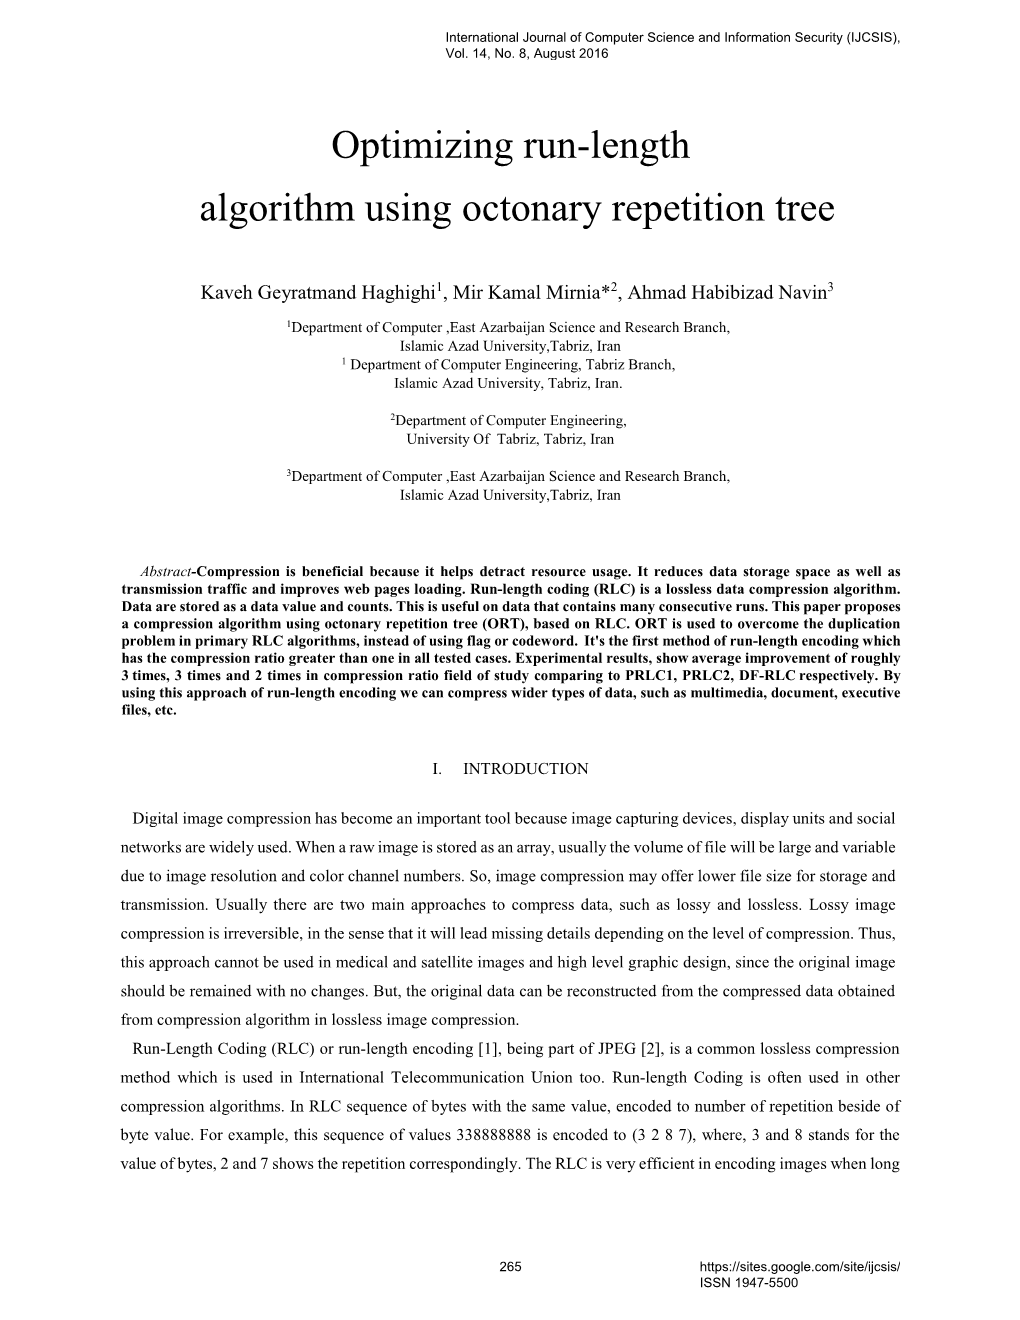 Optimizing Run-Length Algorithm Using Octonary Repetition Tree